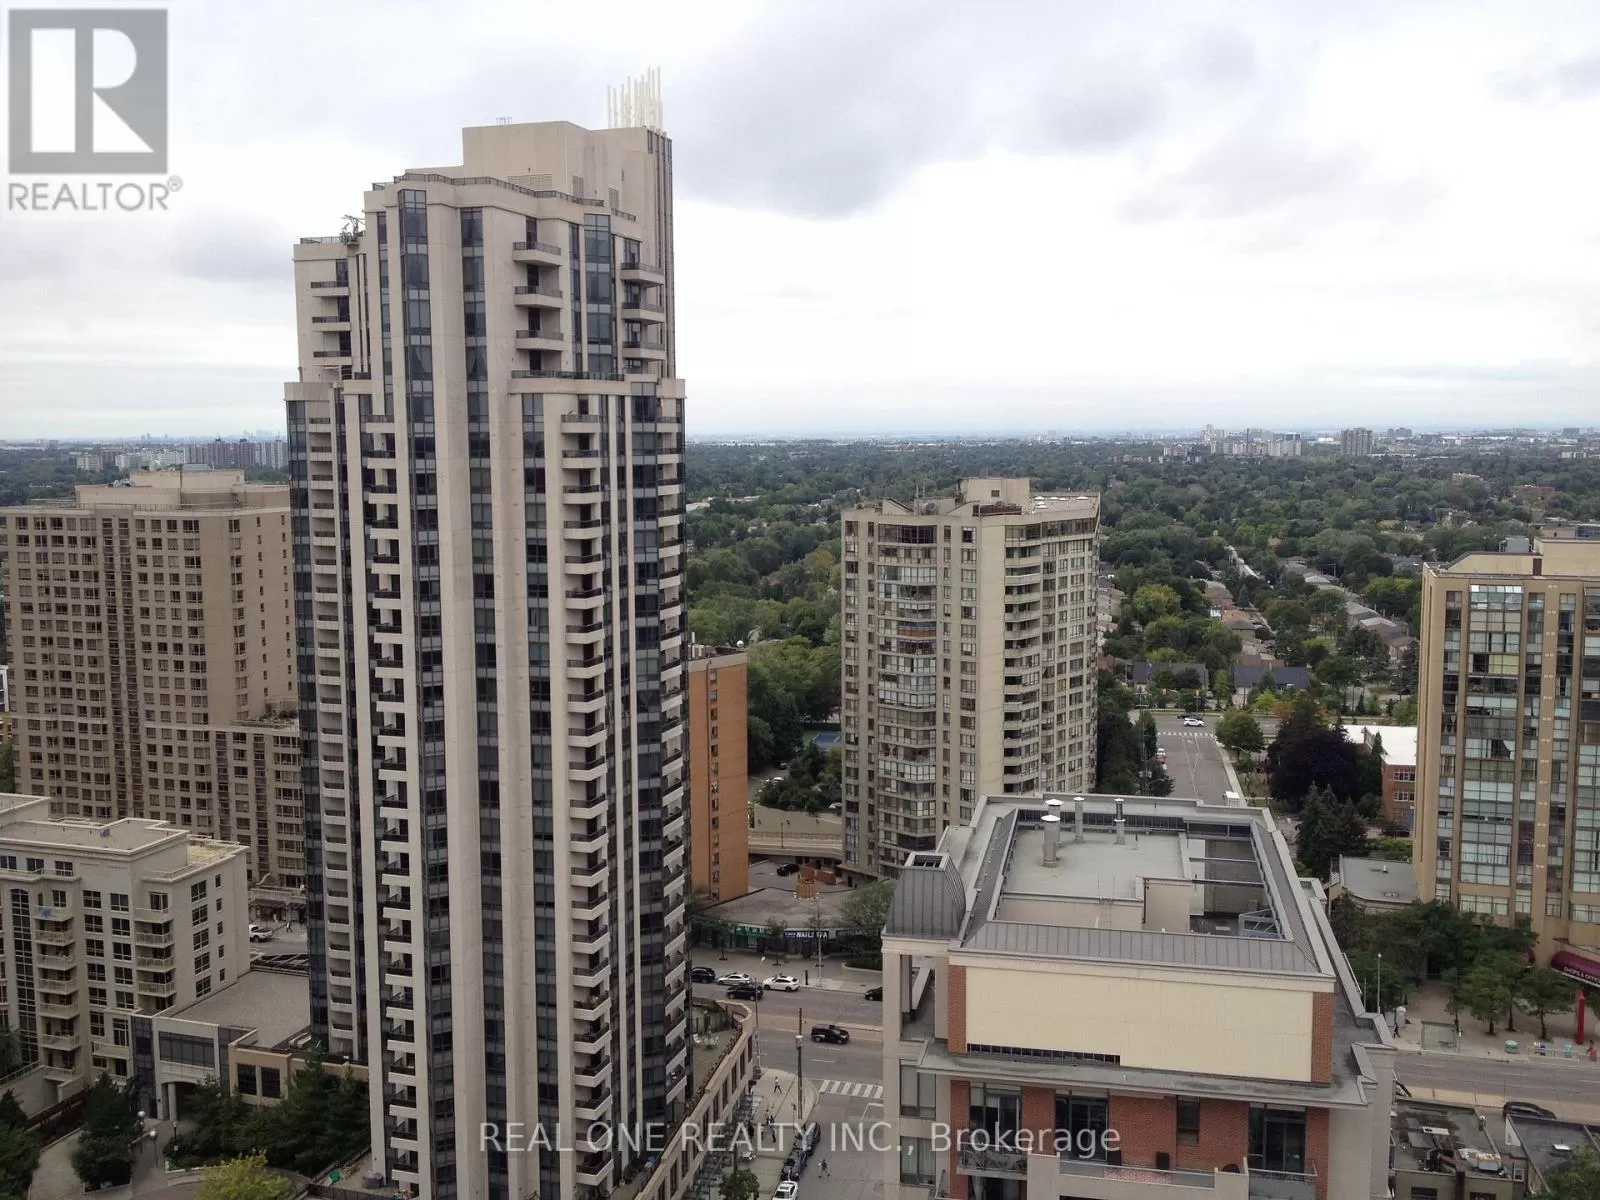 Apartment for rent: 2312 - 60 Byng Avenue, Toronto, Ontario M2N 7K3